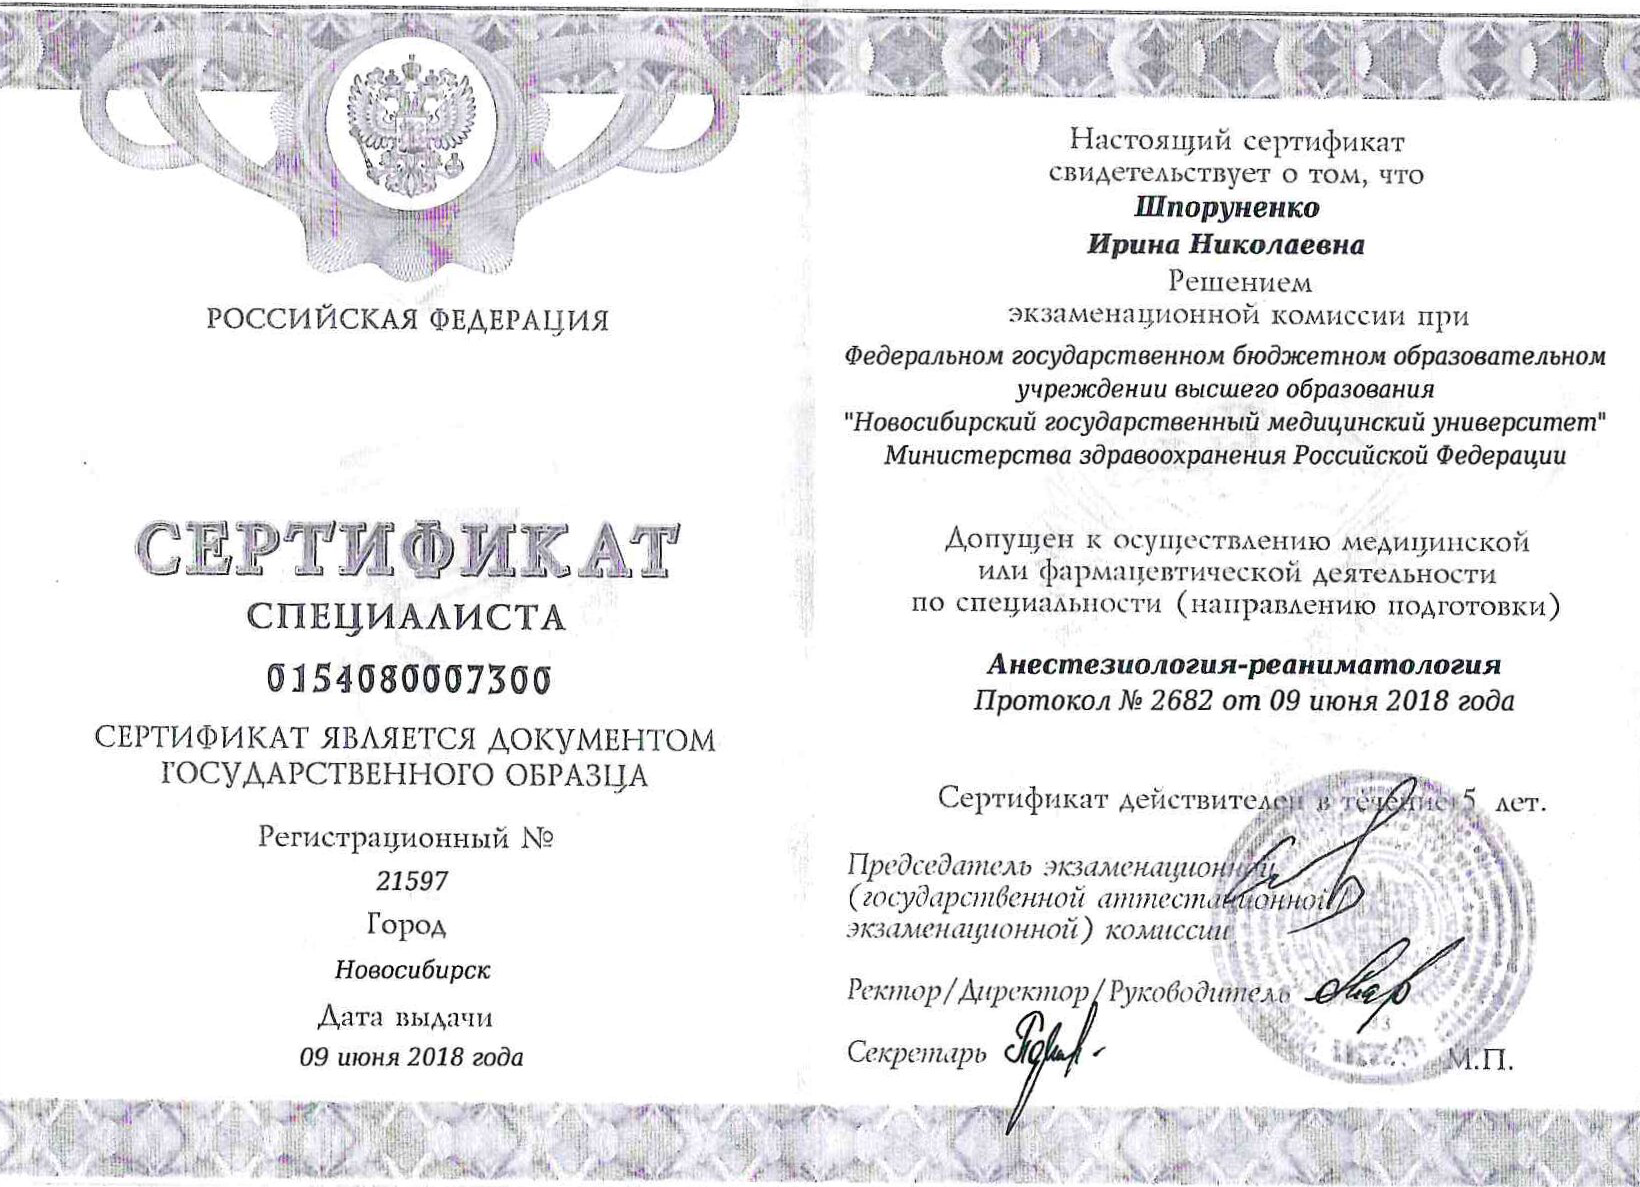 Сертификат специалиста анестезиология-реаниматология. 2018 г.